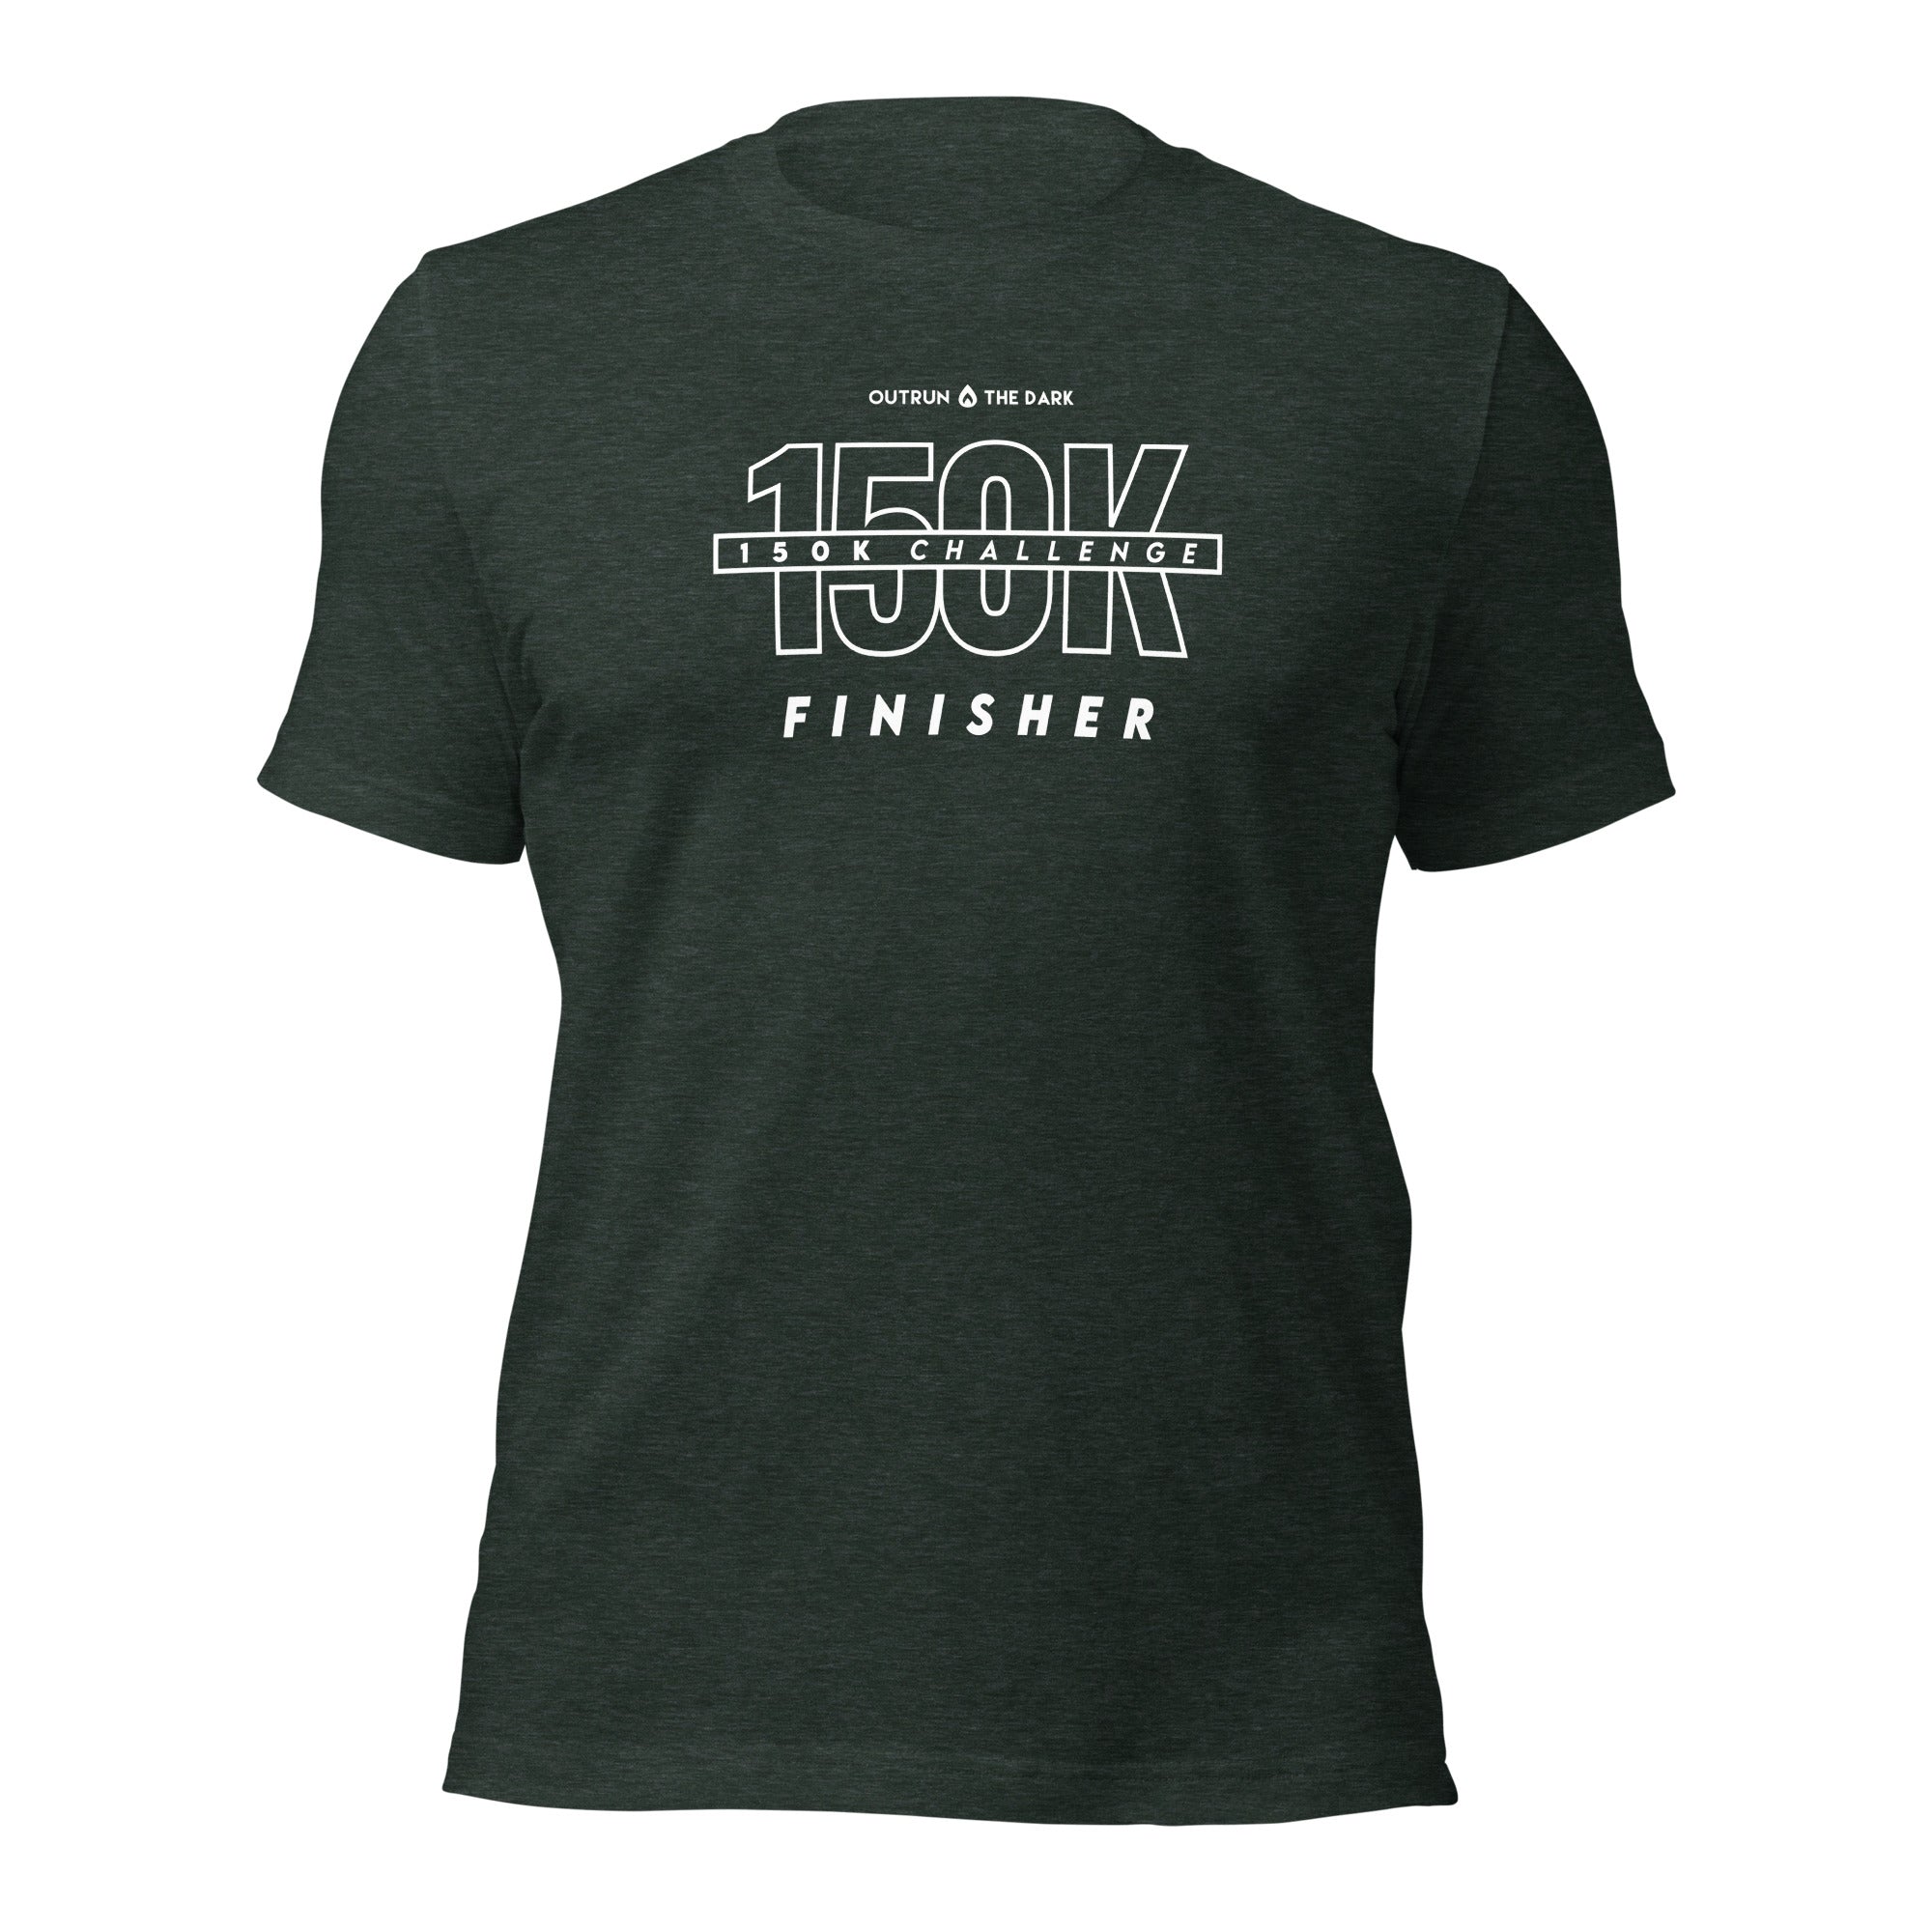 150K Challenge T-Shirt